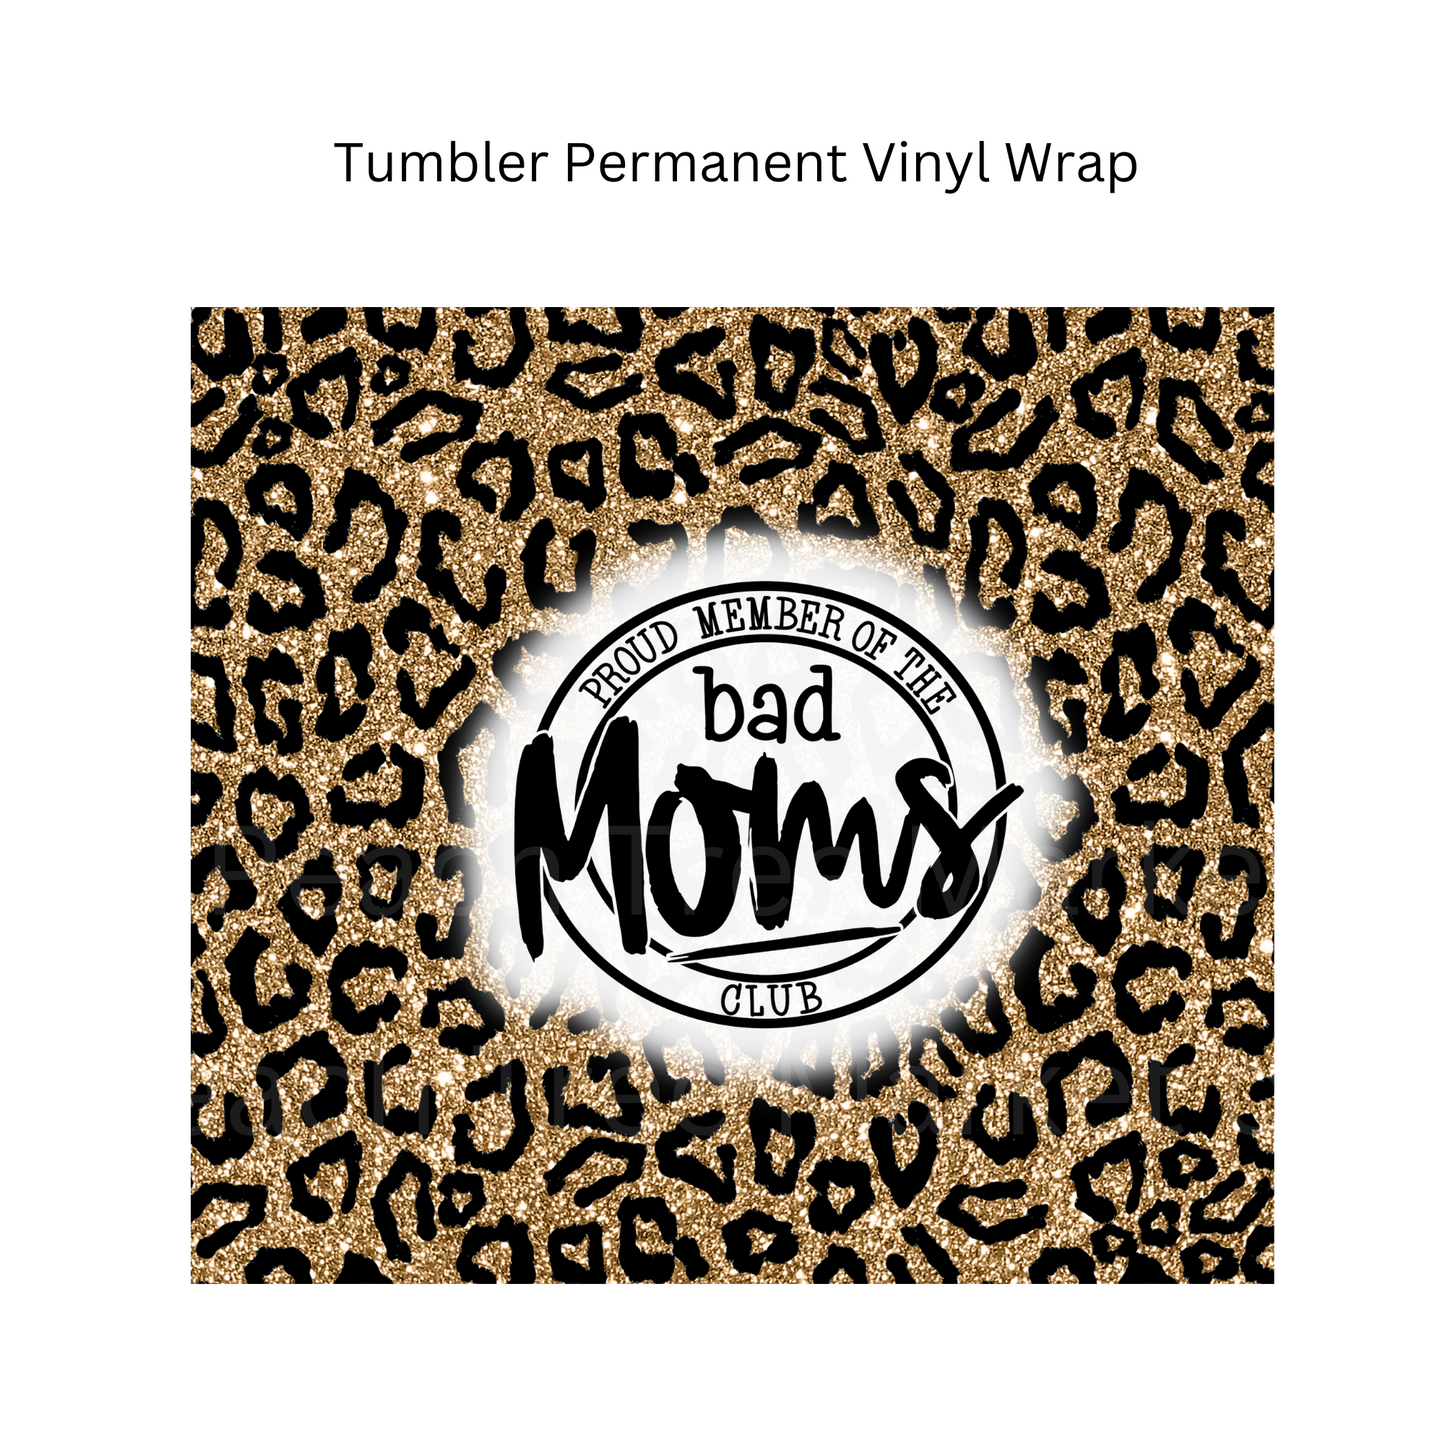 Bad Moms Club Tumbler Permanent Vinyl Wrap